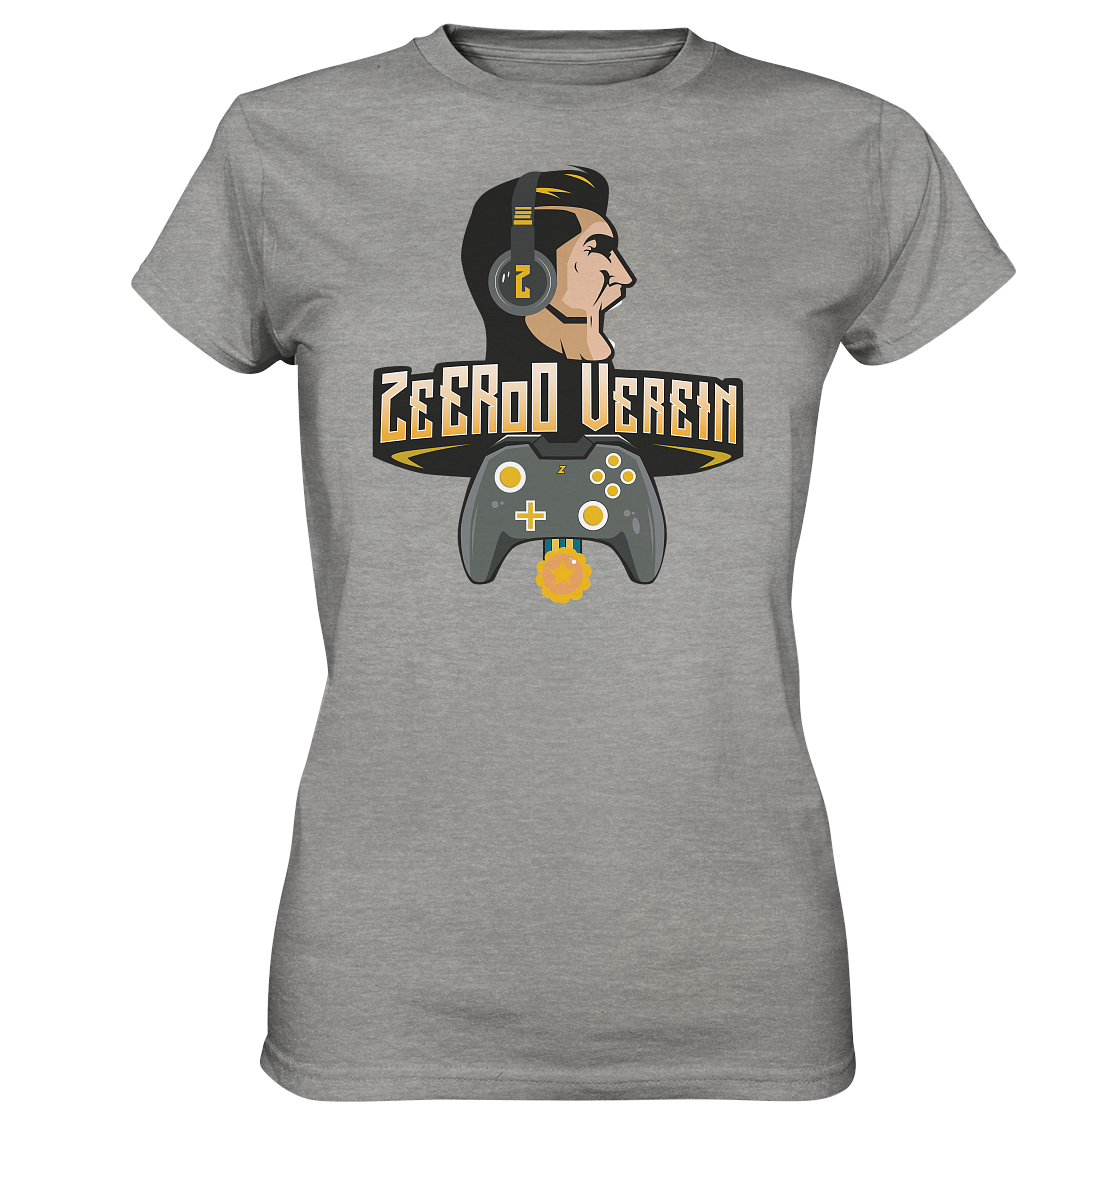 ZEEROO VEREIN - Ladies Basic Shirt